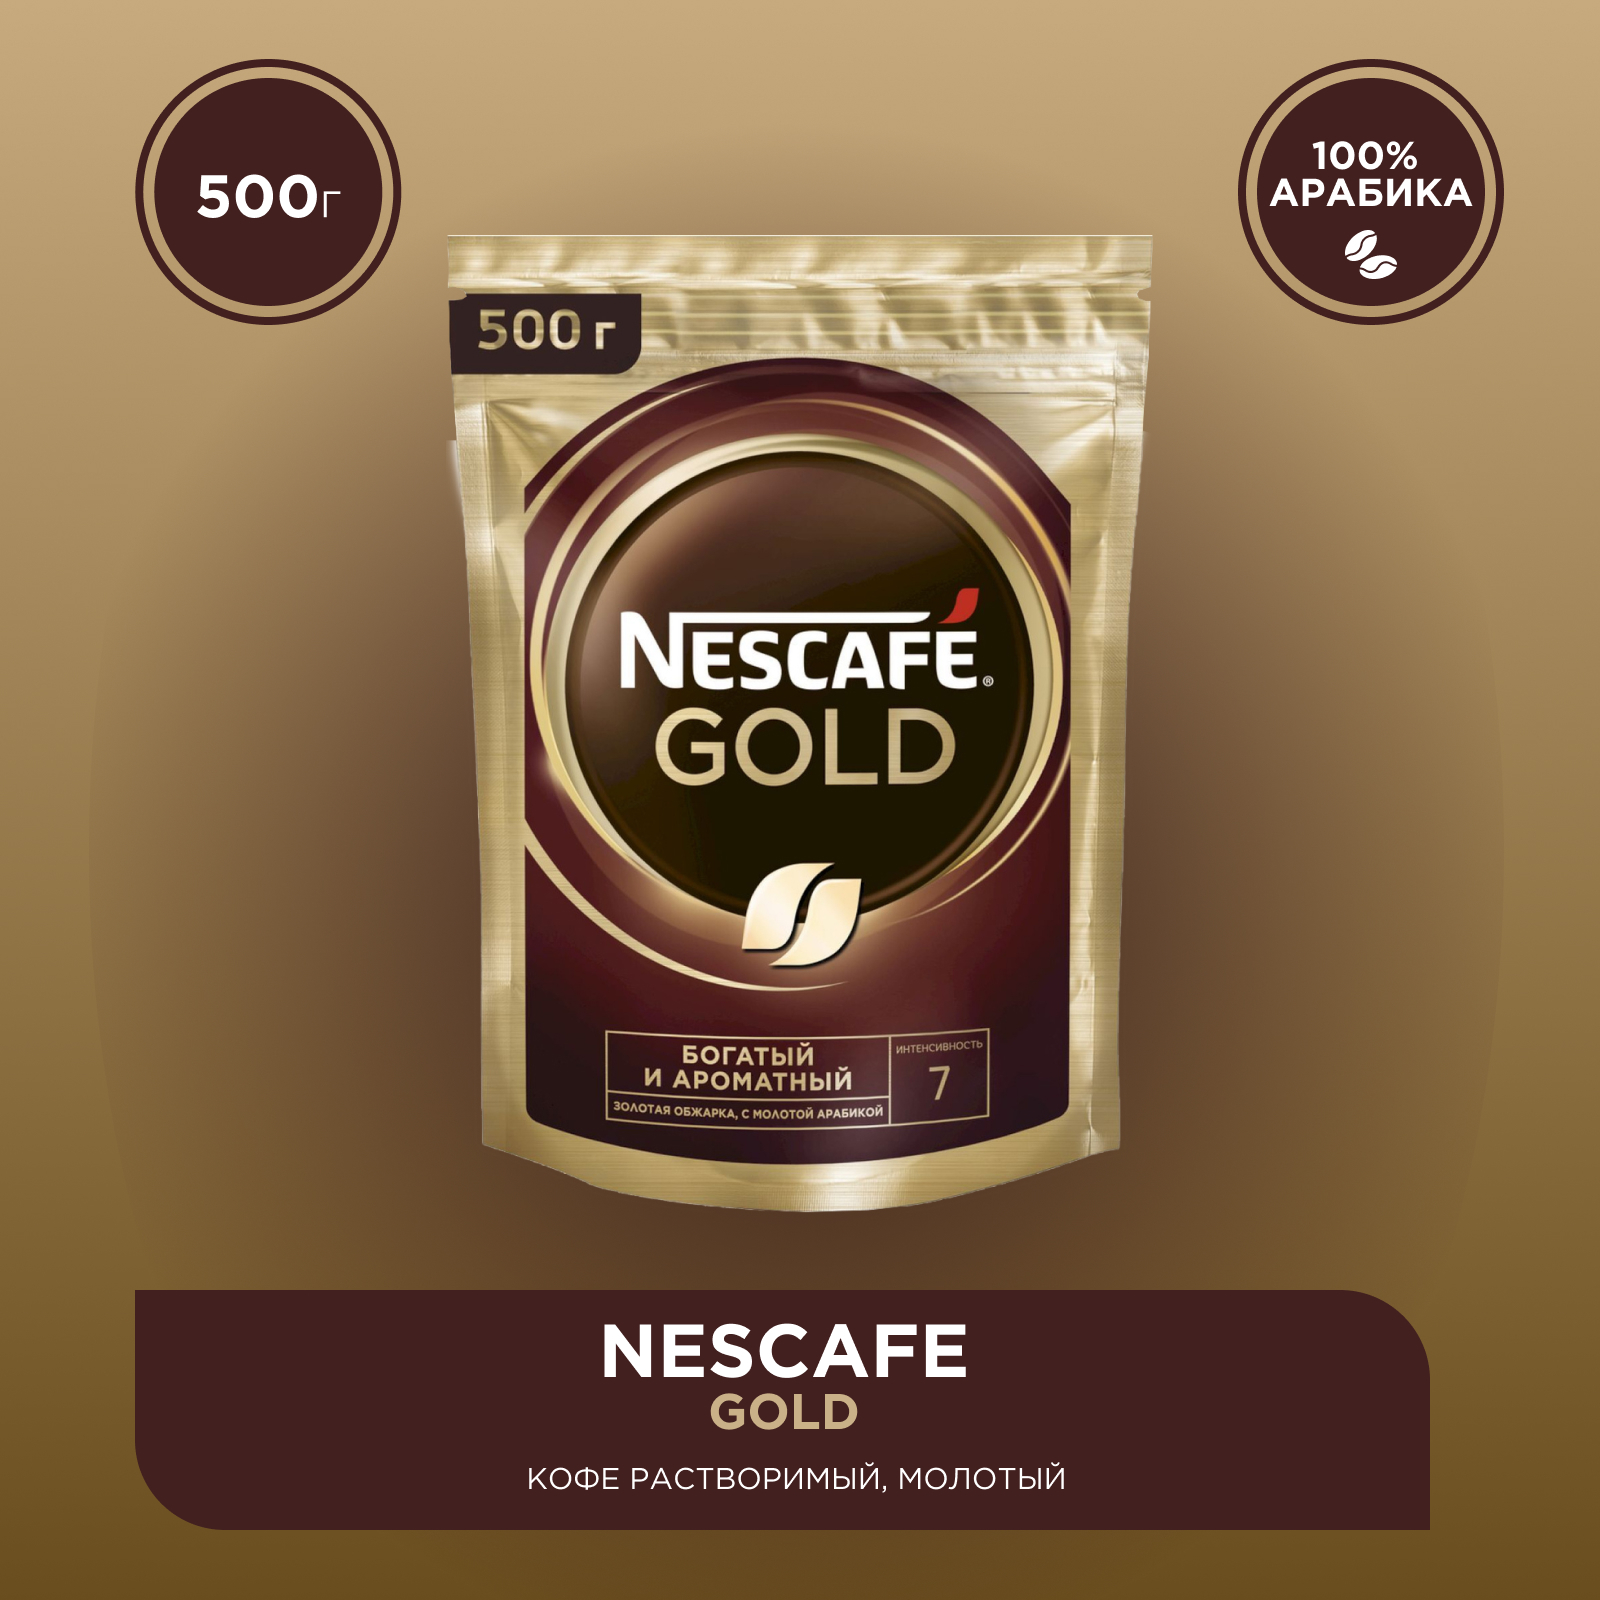 Nescafe gold растворимый 900. Nescafe Gold 750 гр. Нескафе Голд 900 гр. Нескафе Голд 500 гр. Нескафе Голд 320 гр.